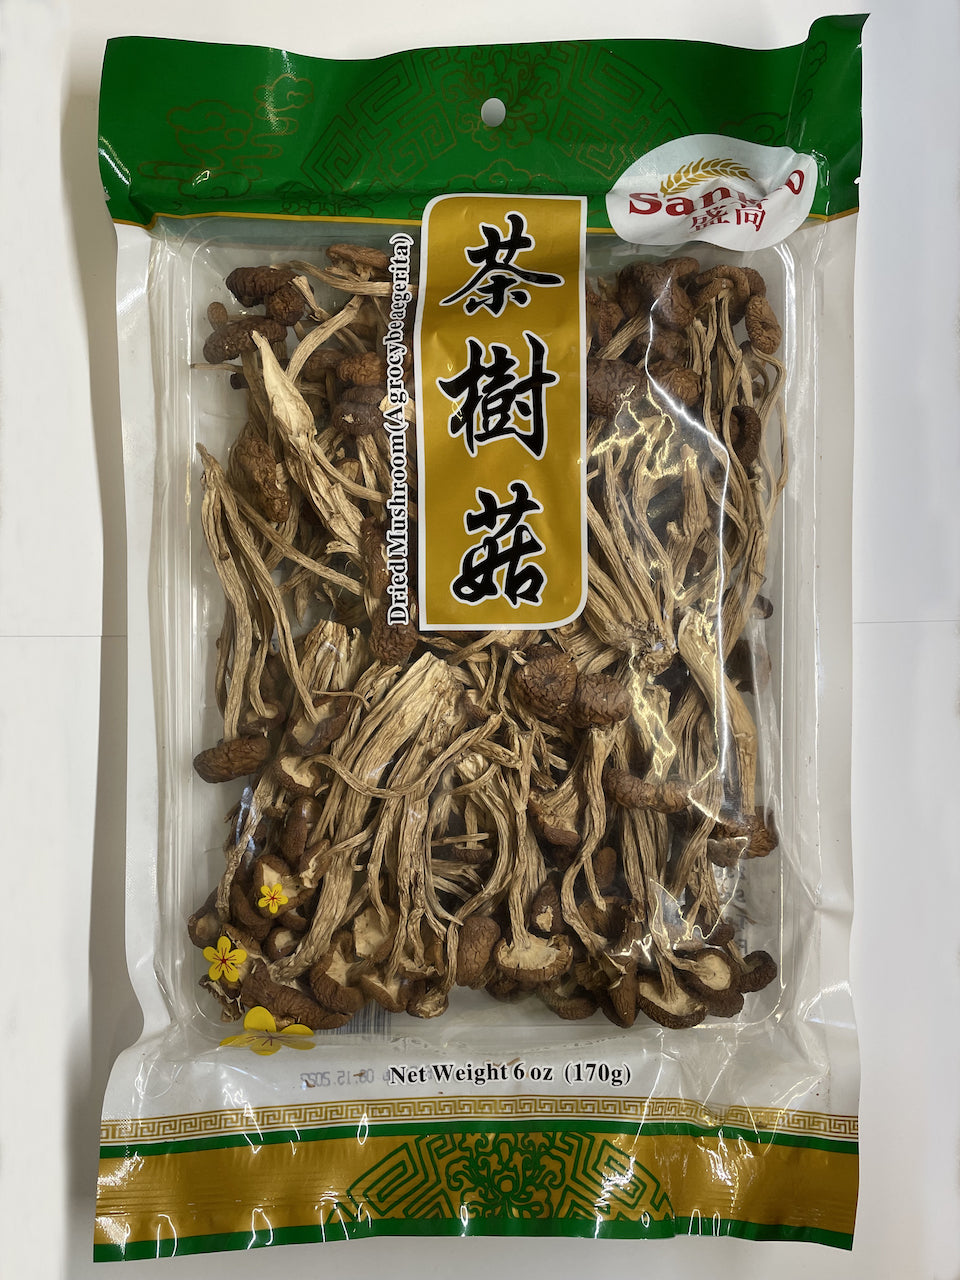 Dried Mushroom Agrocybe Aegerita 茶树菇 6oz